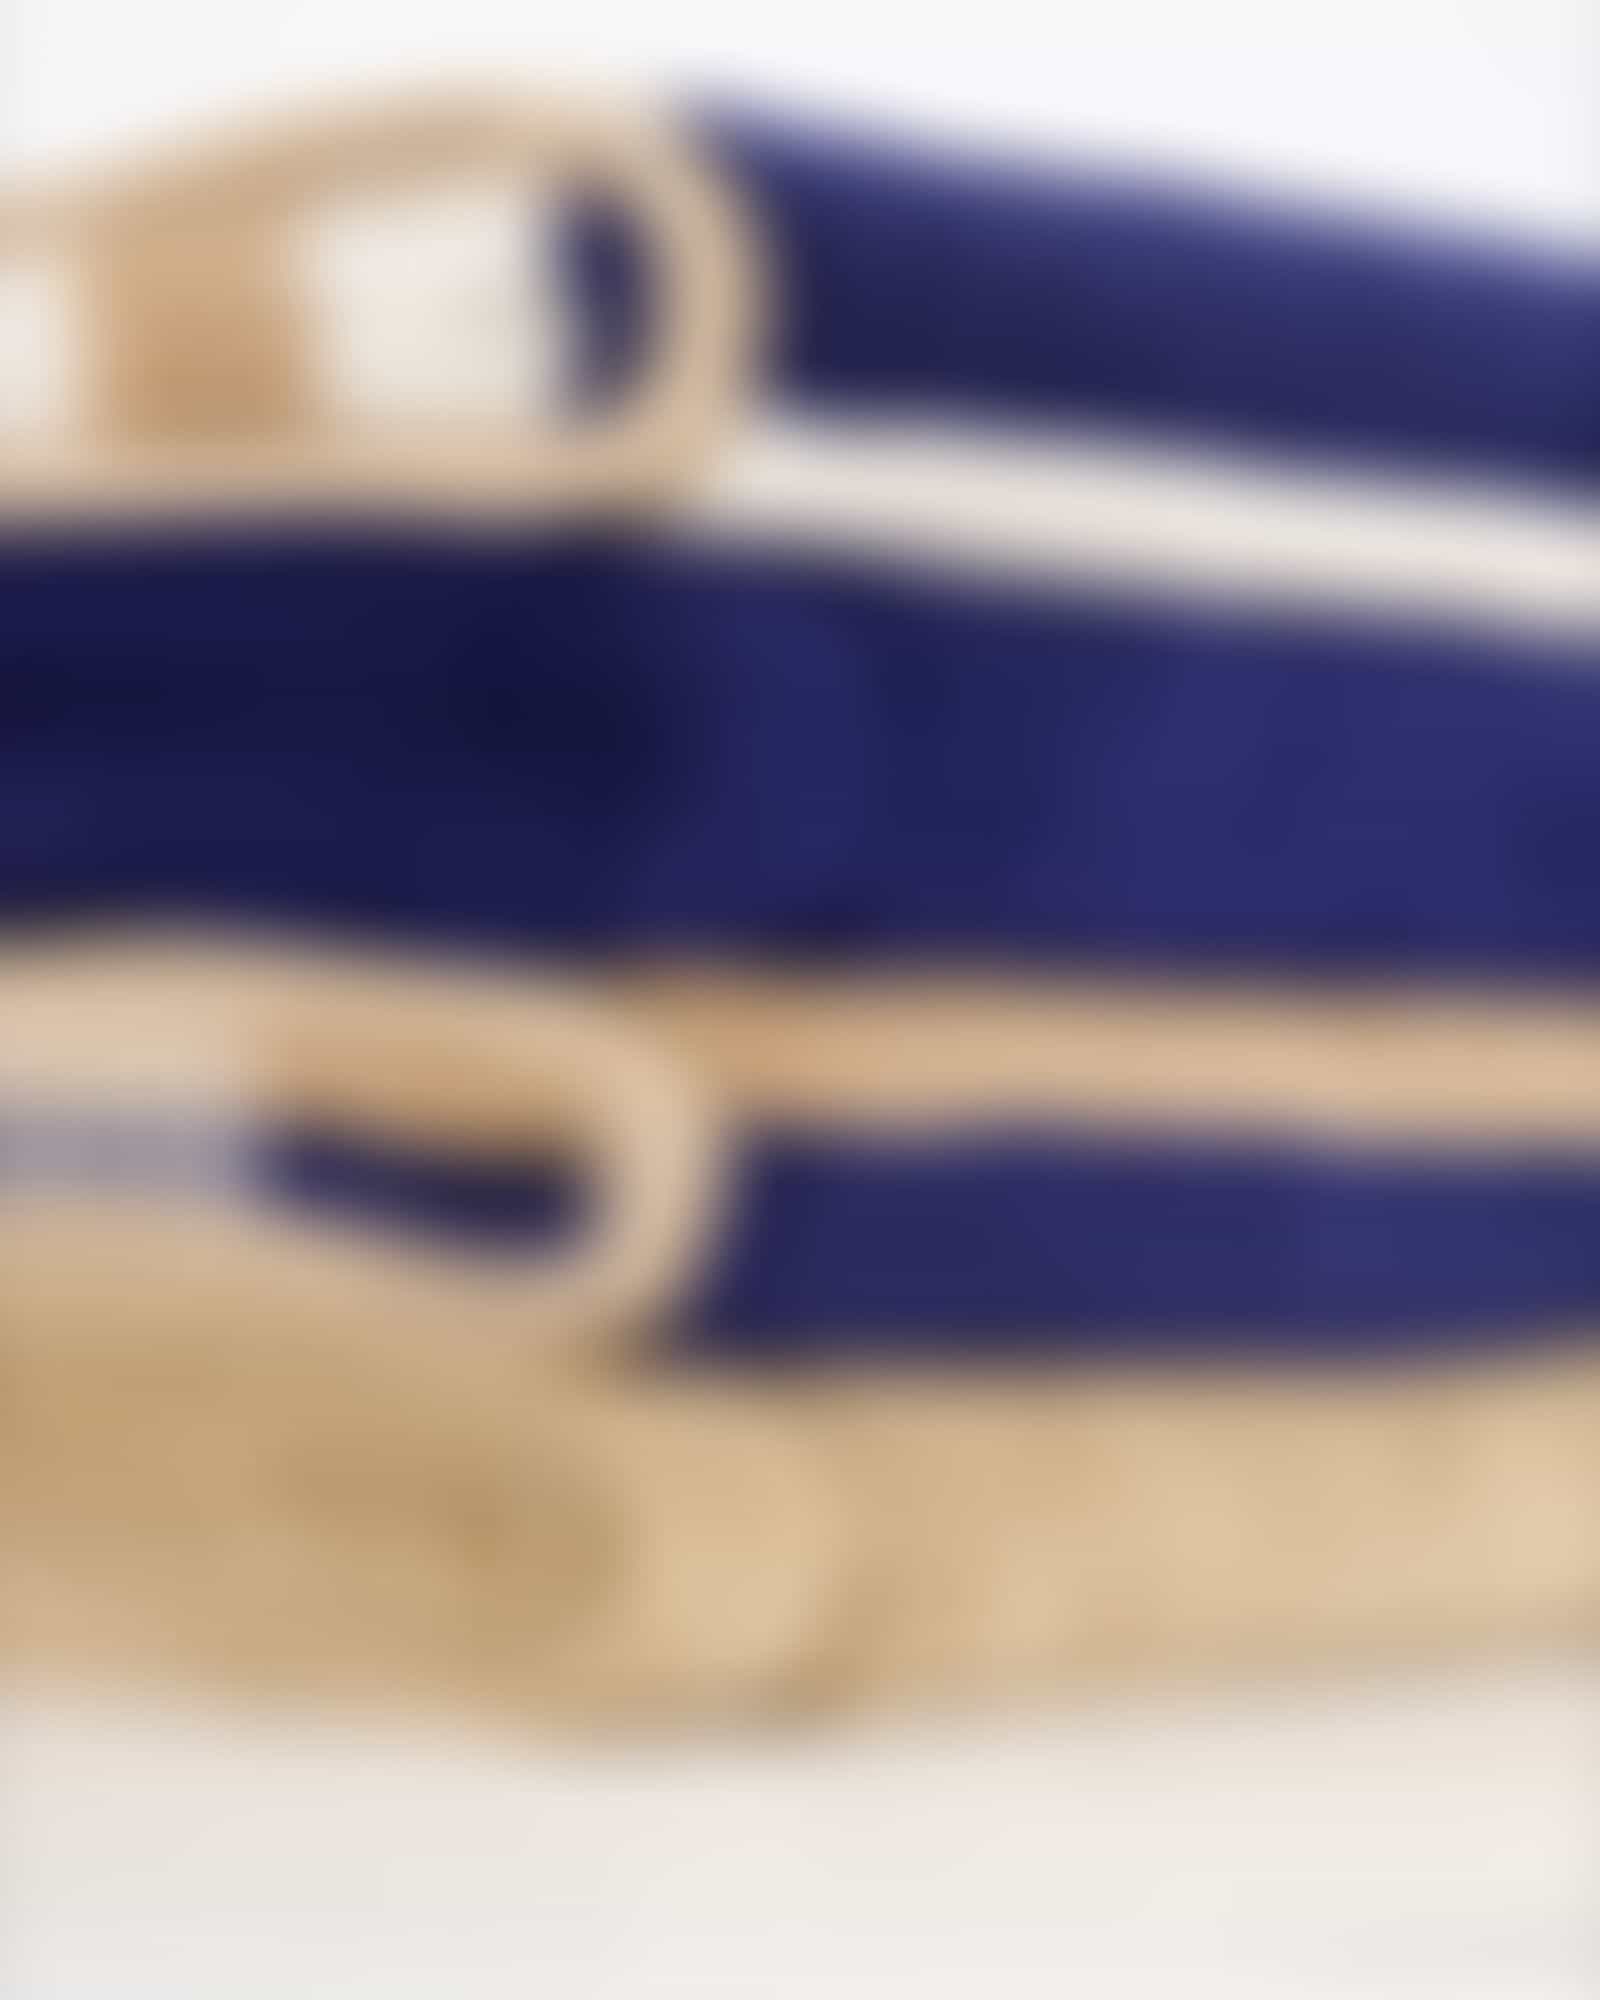 Cawö Handtücher Coast Stripes 6213 - Farbe: navy-natur - 31 - Waschhandschuh 16x22 cm